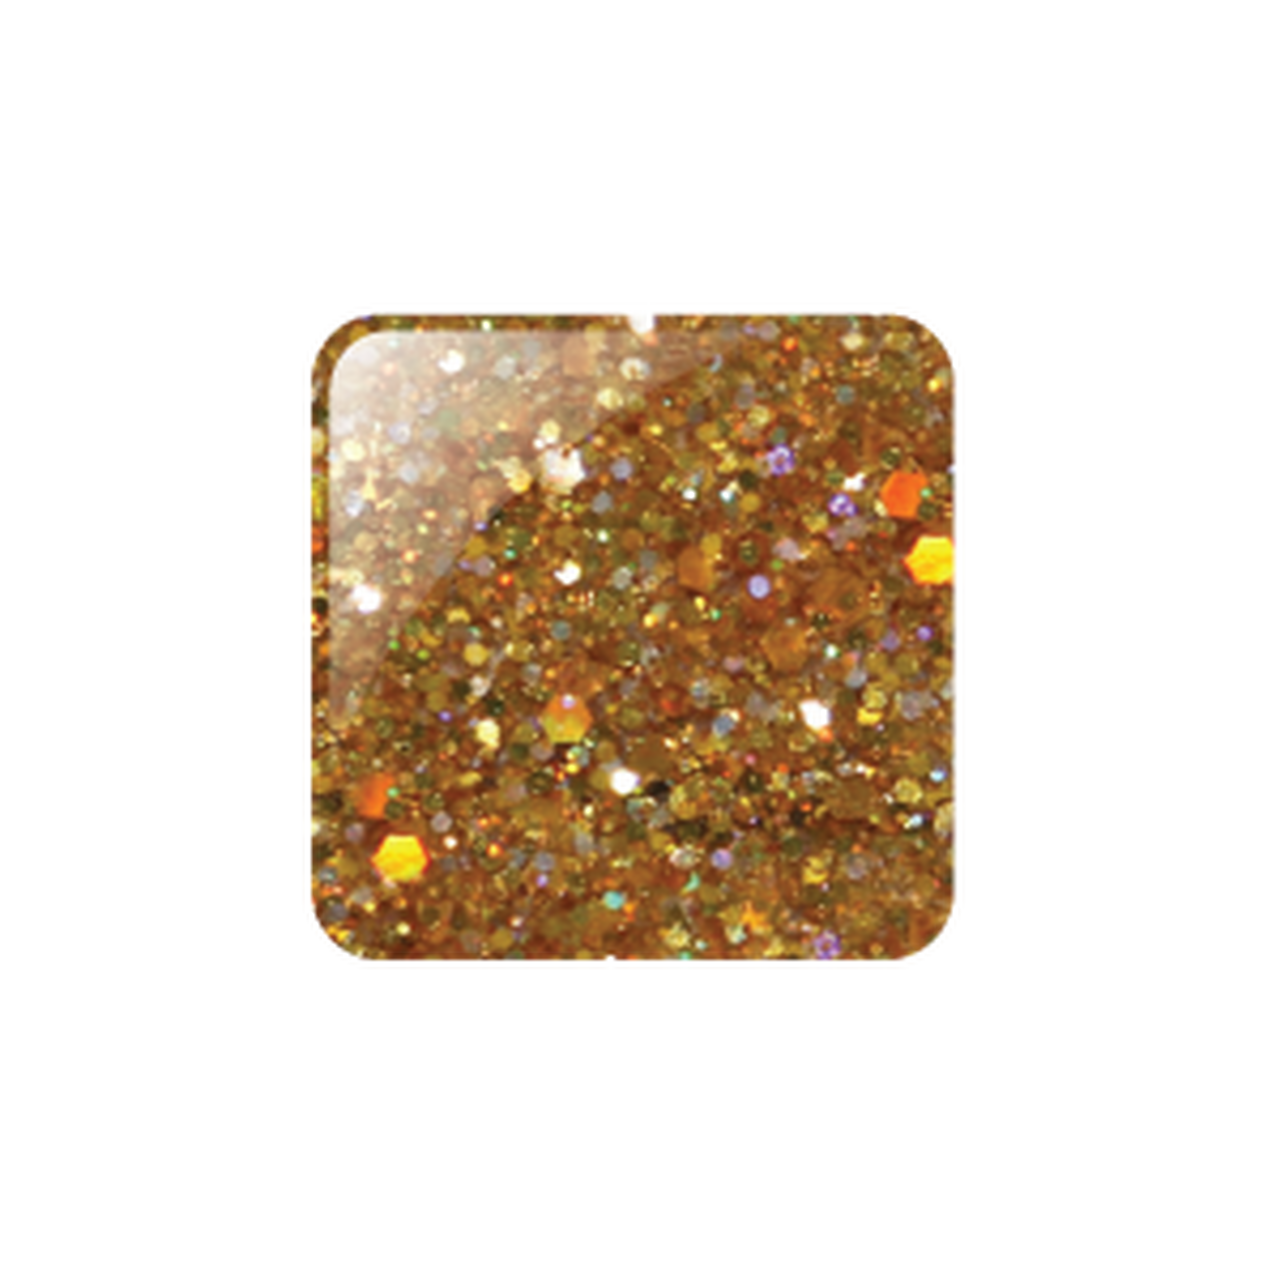 Glam & Glits - Fantasy Acrylic - Gorgeous Gold 1oz - FAC524 - Premier Nail Supply 